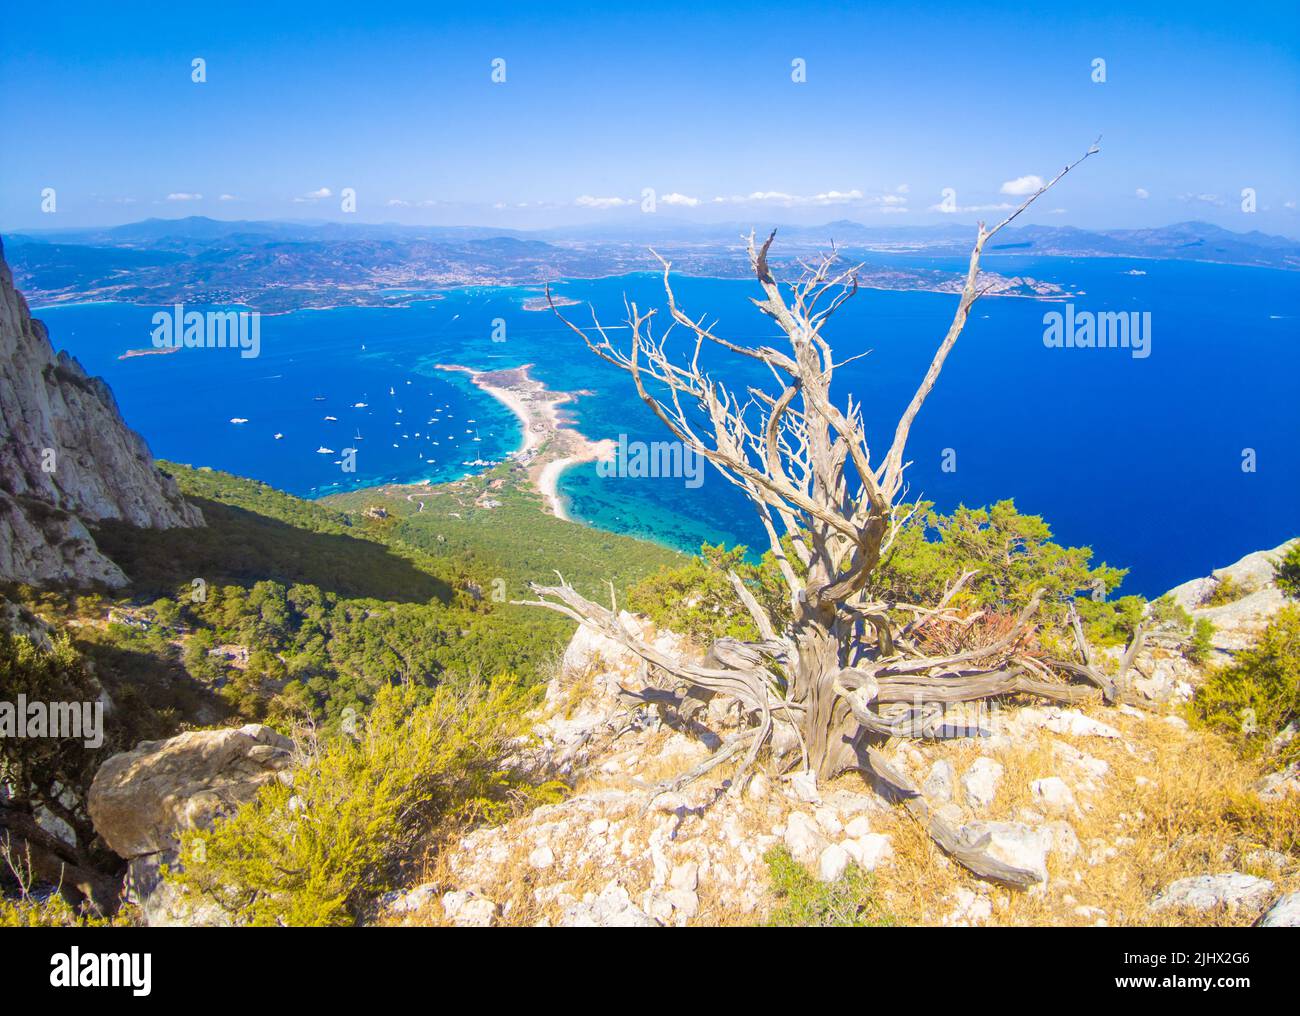 Isola di Tavolara in Sardegna (Italy) - The worderful mountain island in Sardinia region, with beach, blue sea, and incredible alpinistic trekking Stock Photo